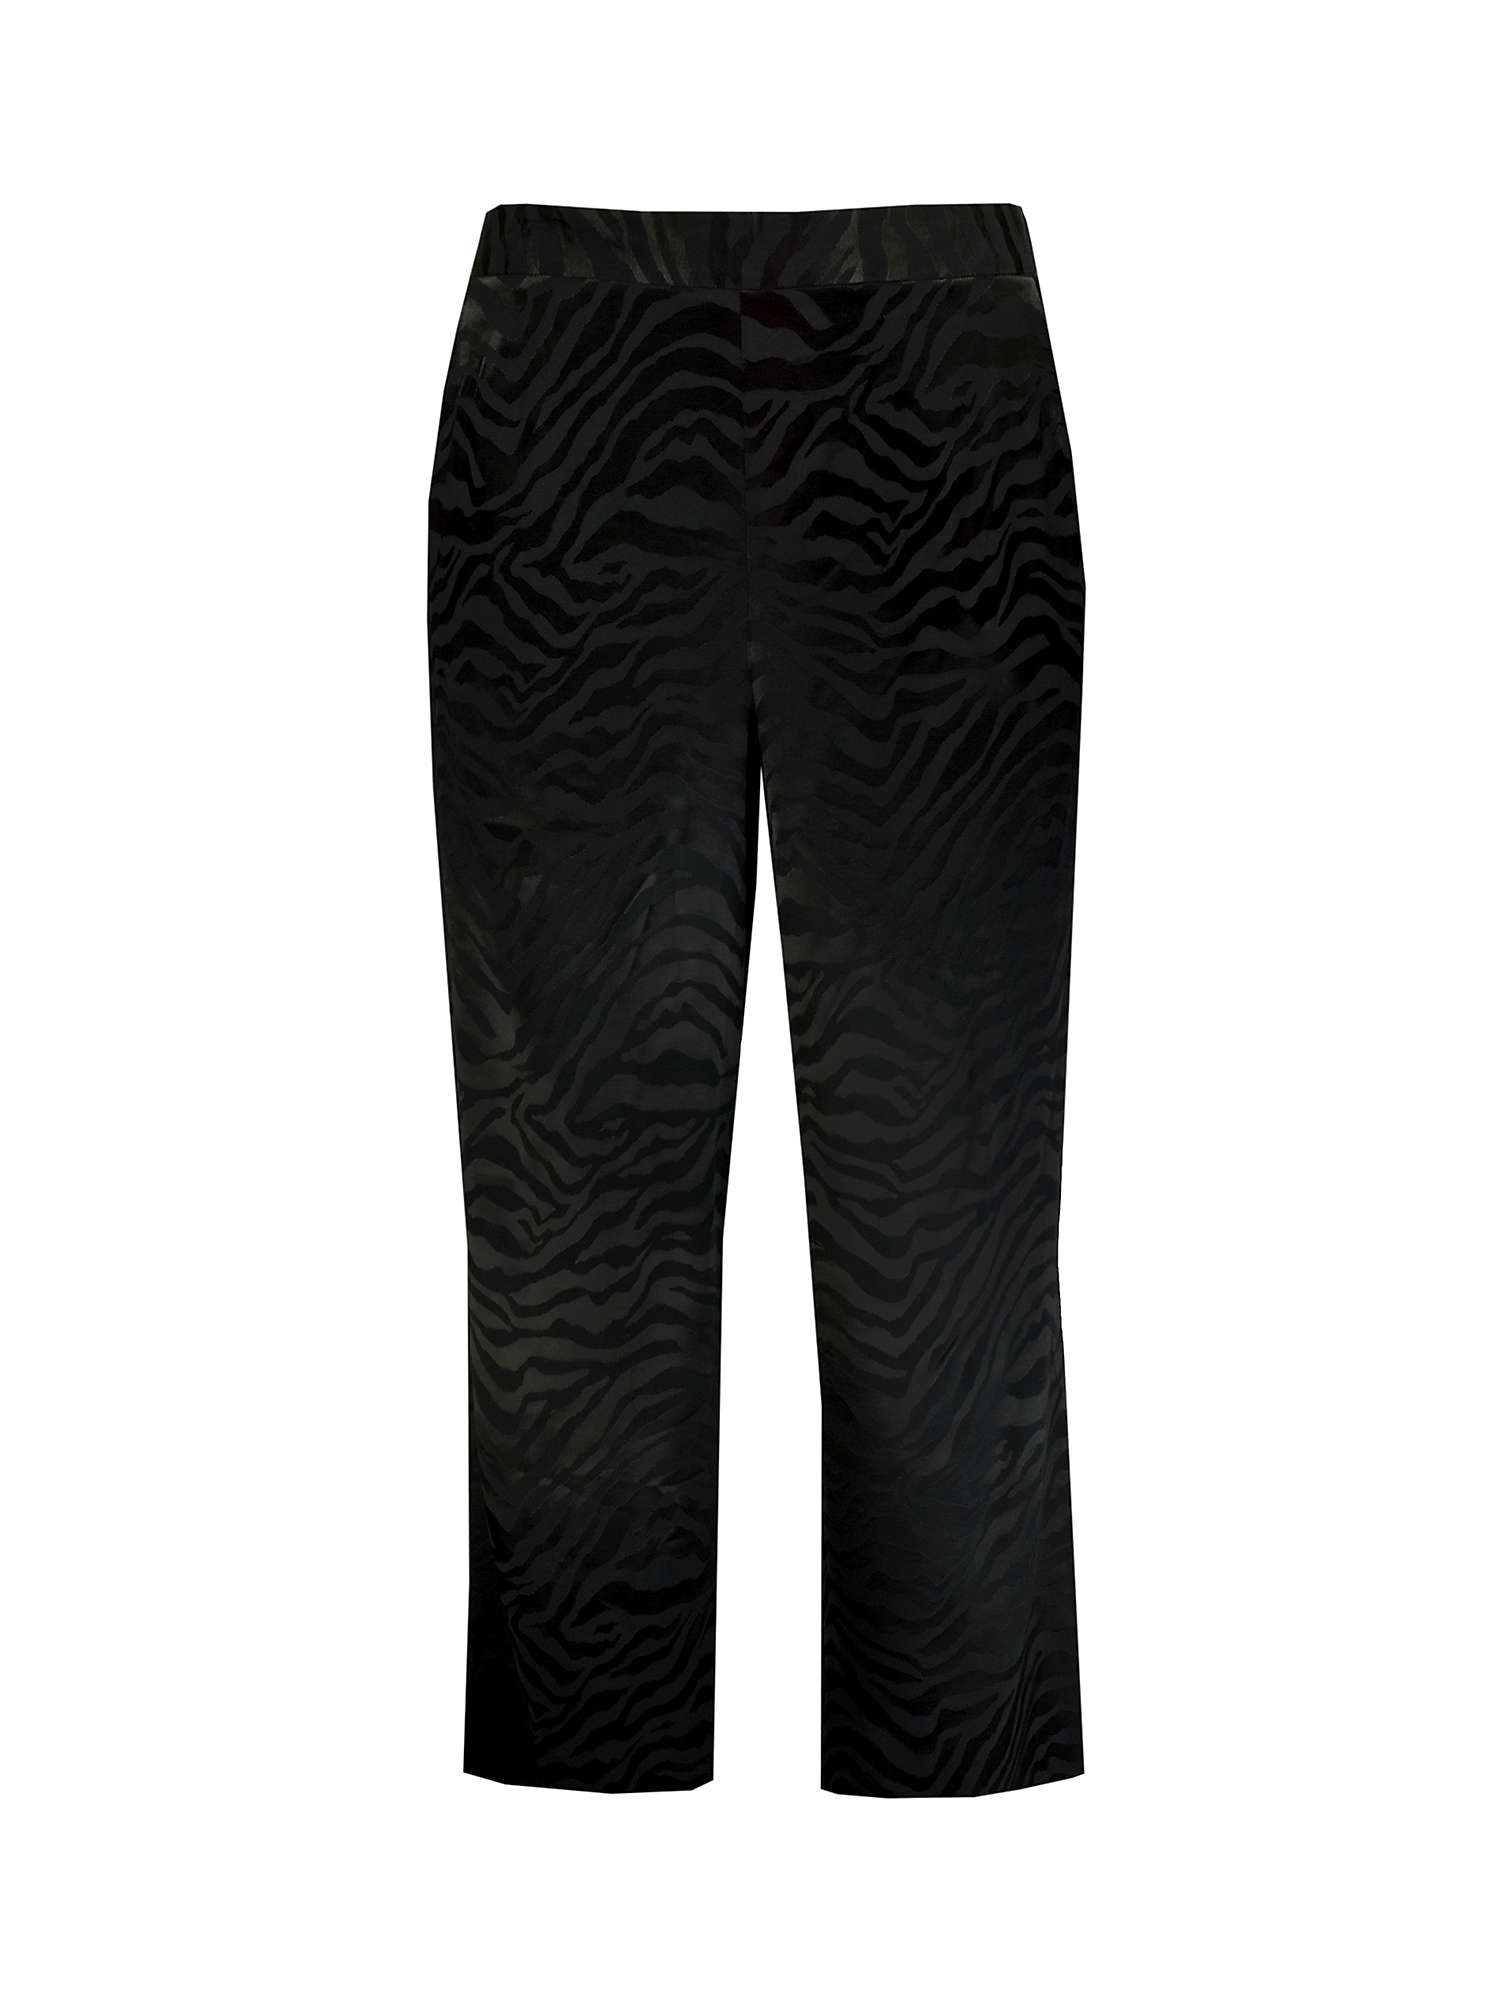 Buy Live Unlimited Zebra Jacquard Trousers, Black Online at johnlewis.com